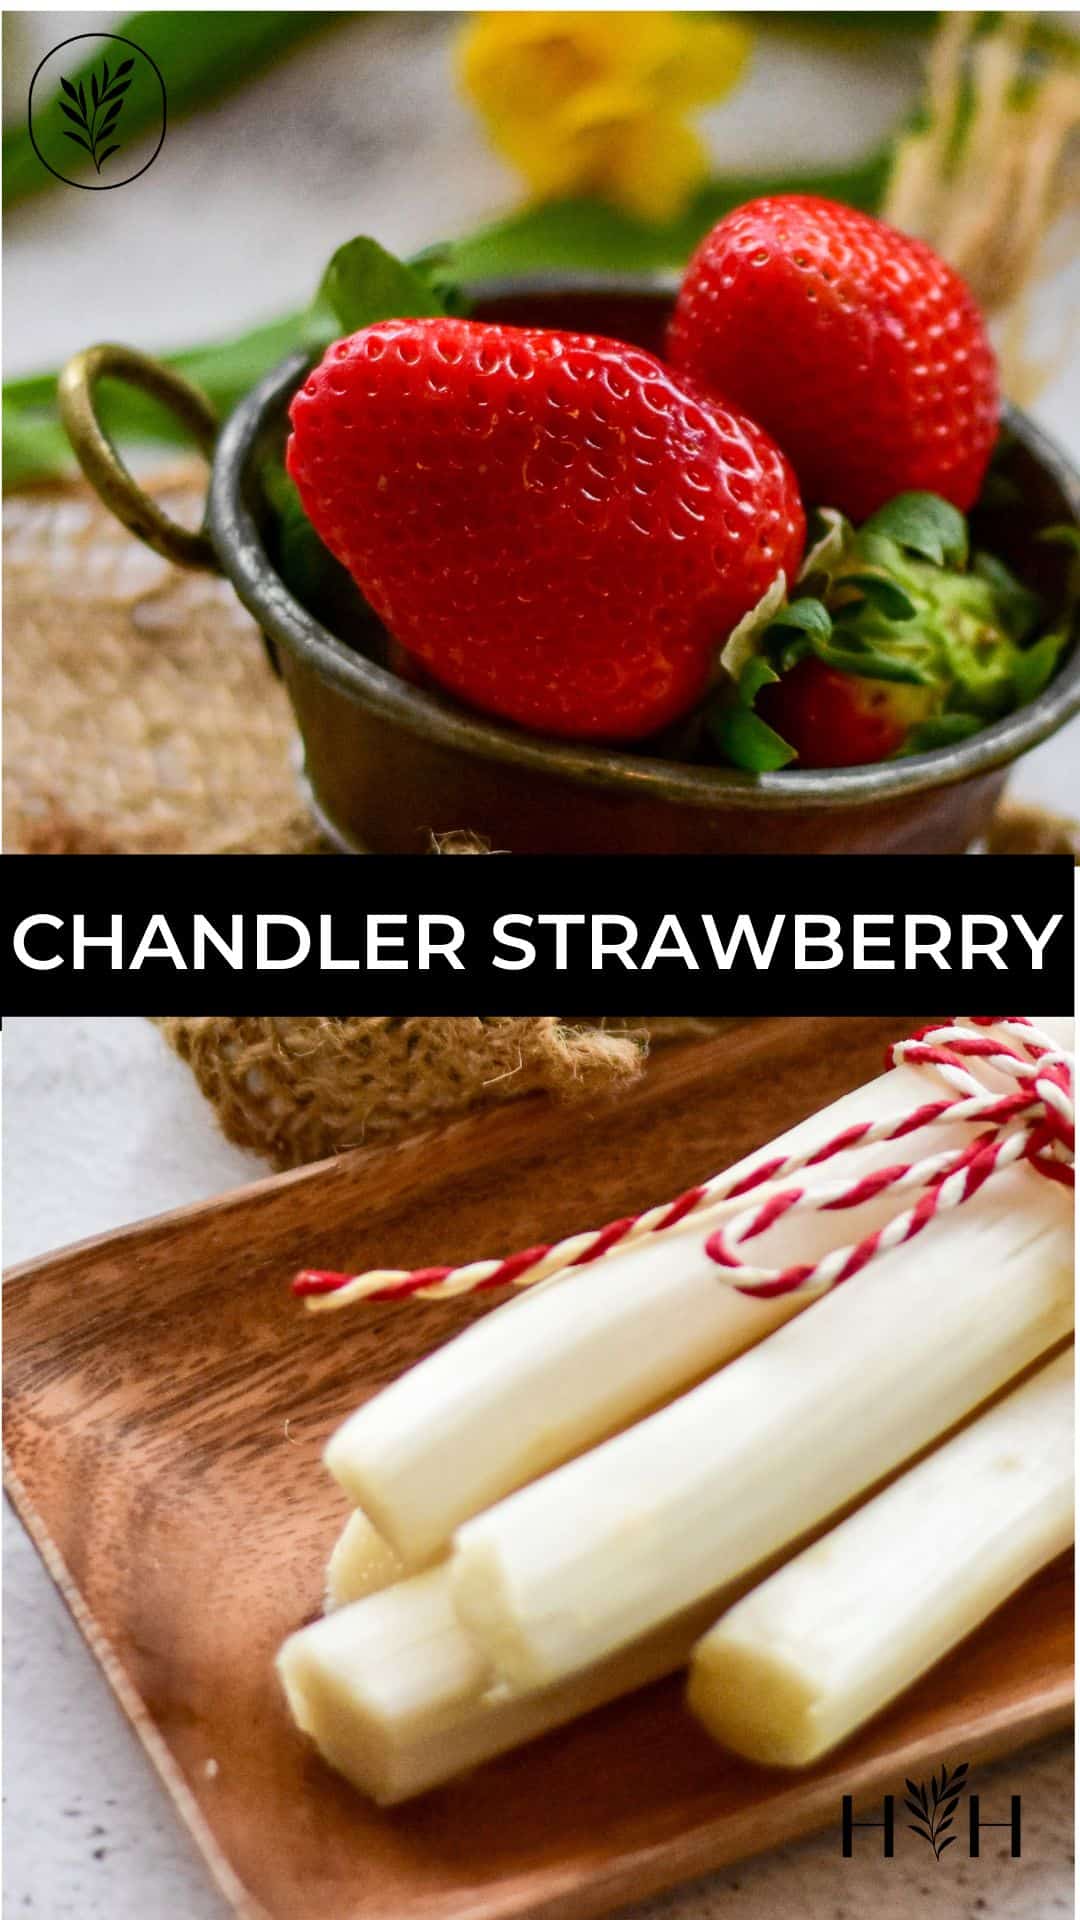 Chandler strawberry via @home4theharvest